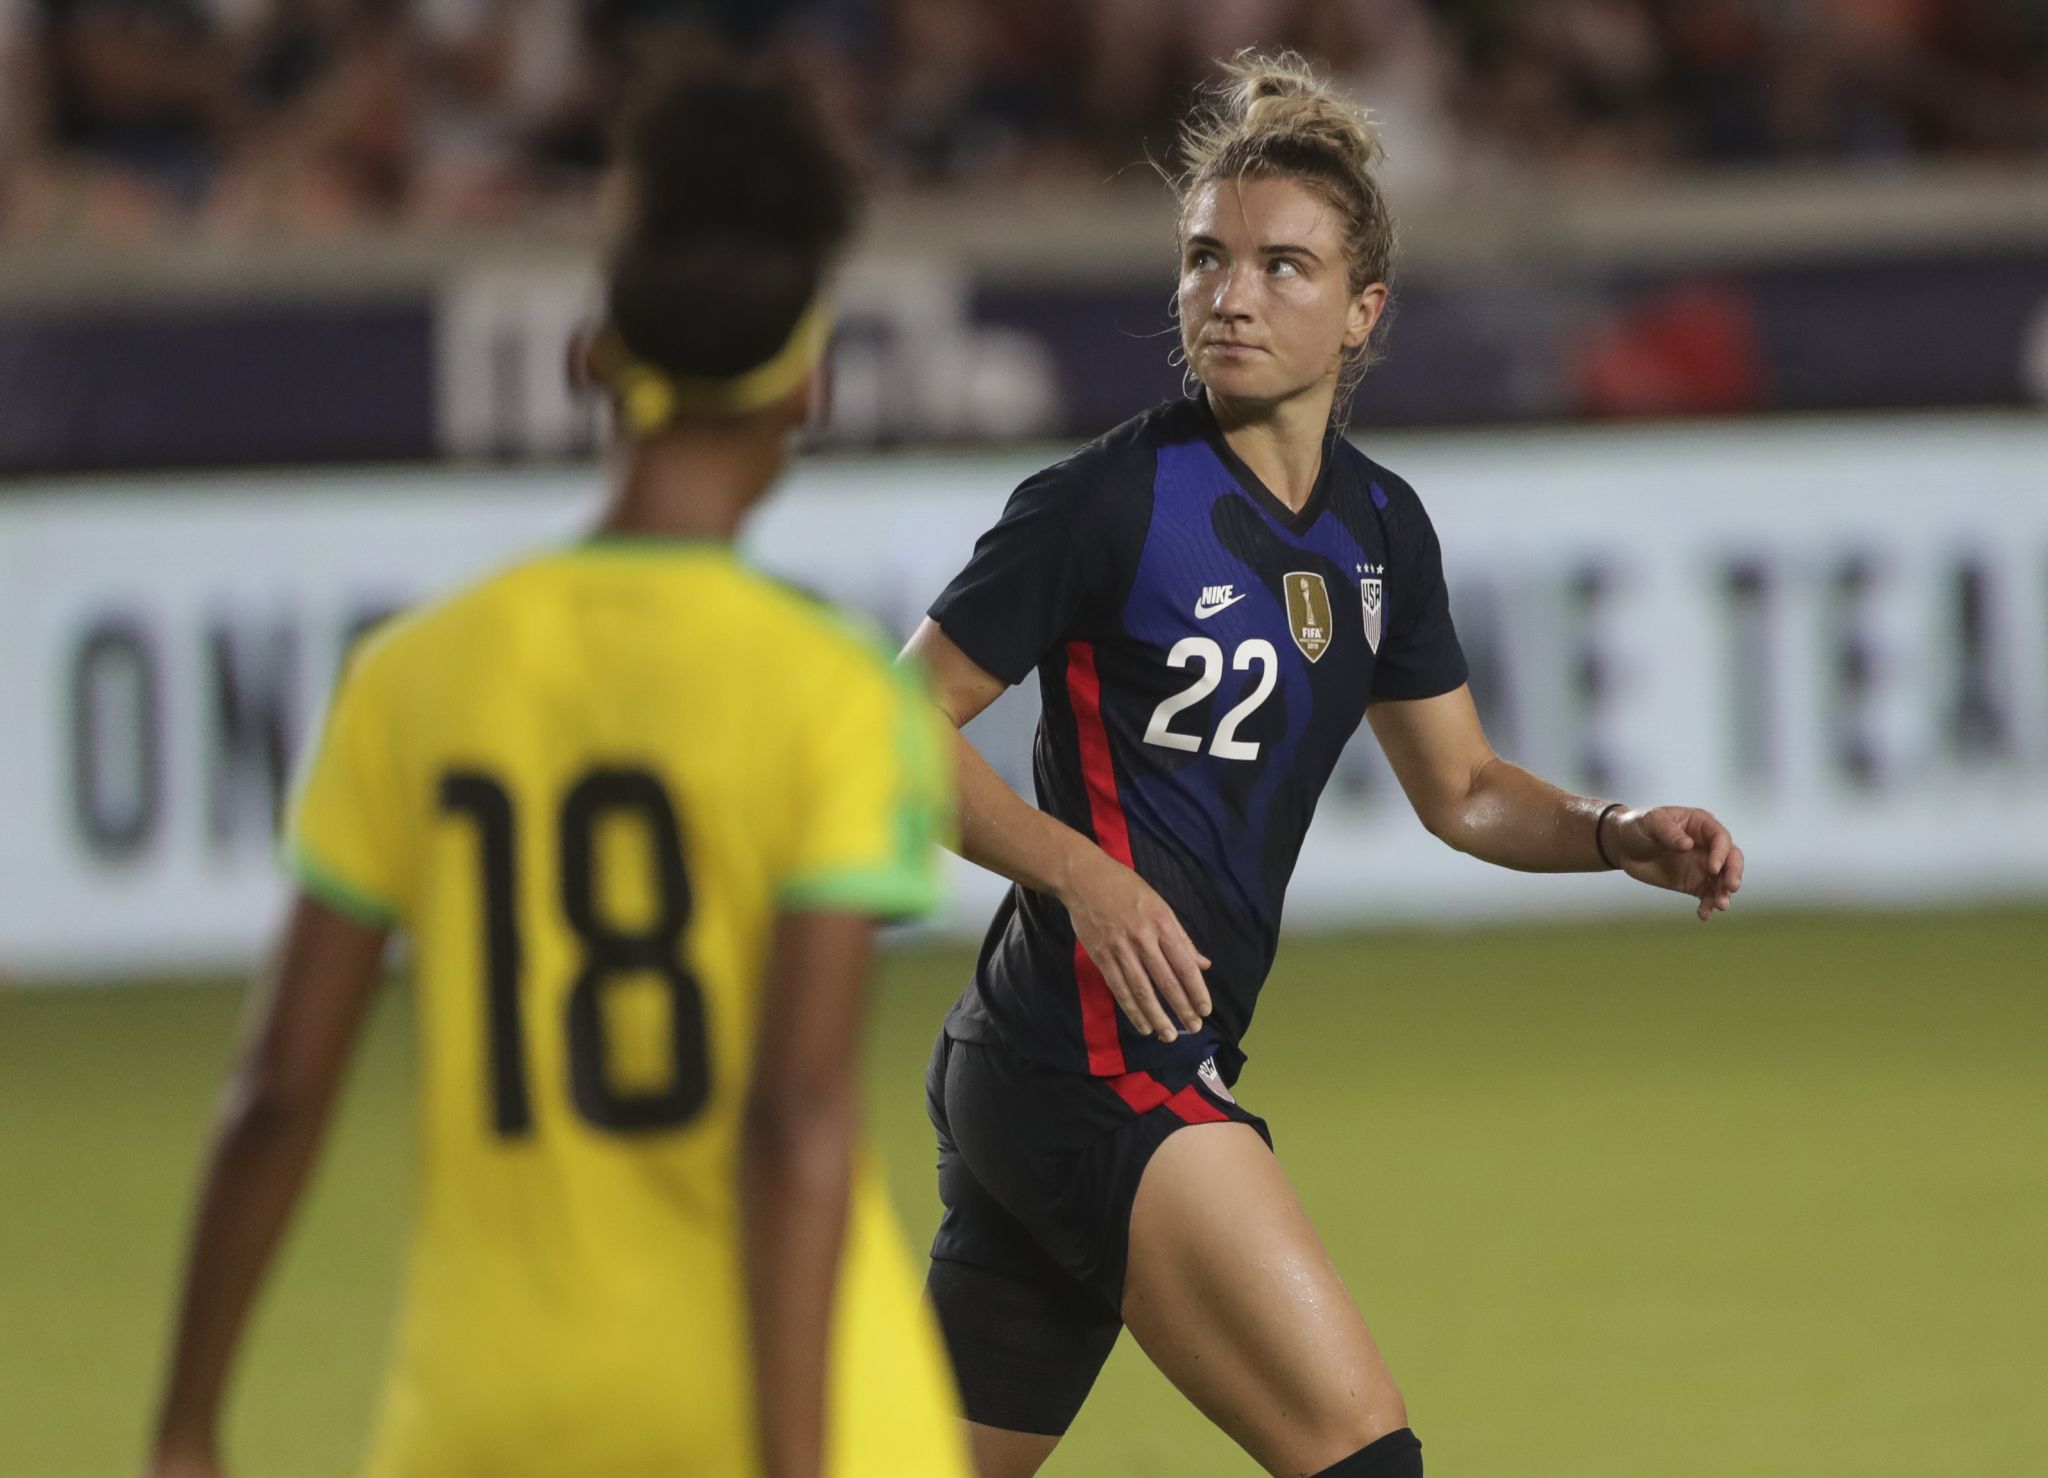 Dash midfielder Kristie Mewis earns spot on U.S. Olympic team